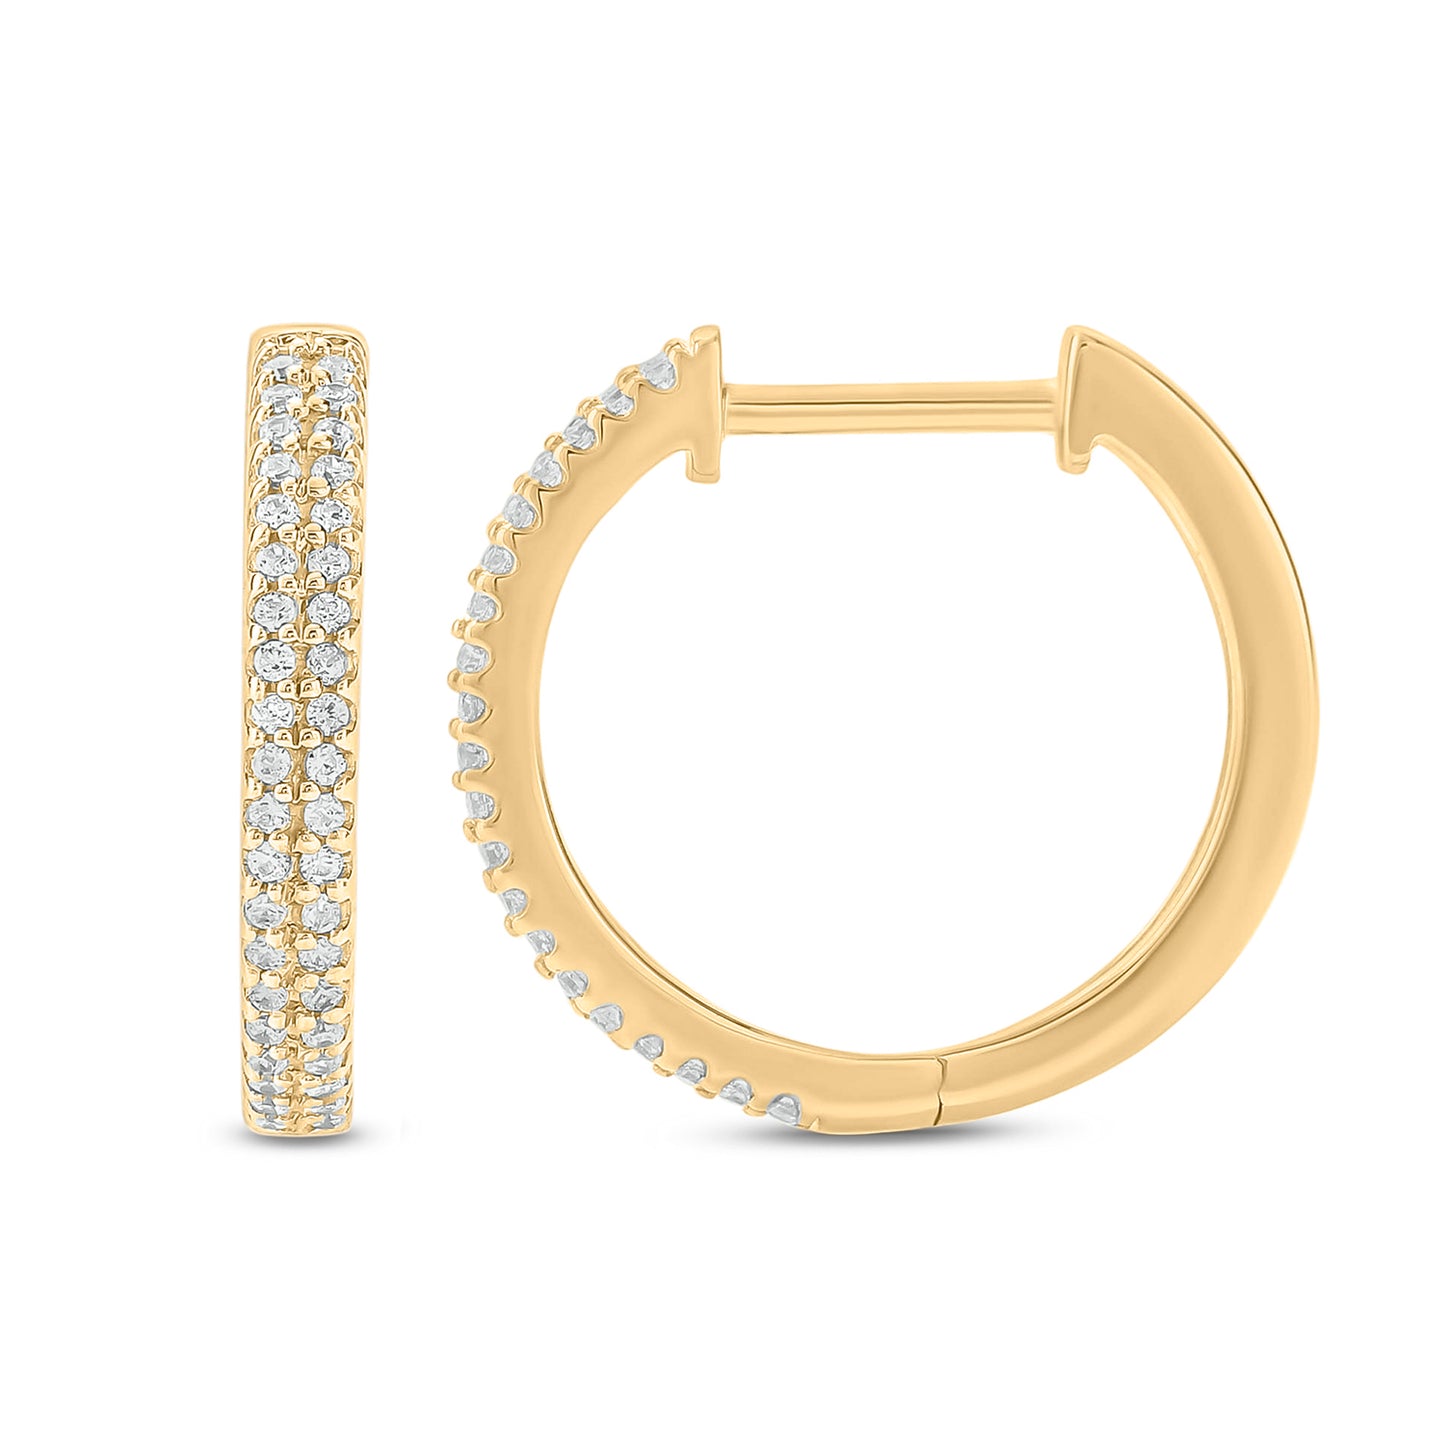 10K Gold Classic Diamond Hoop Earrings